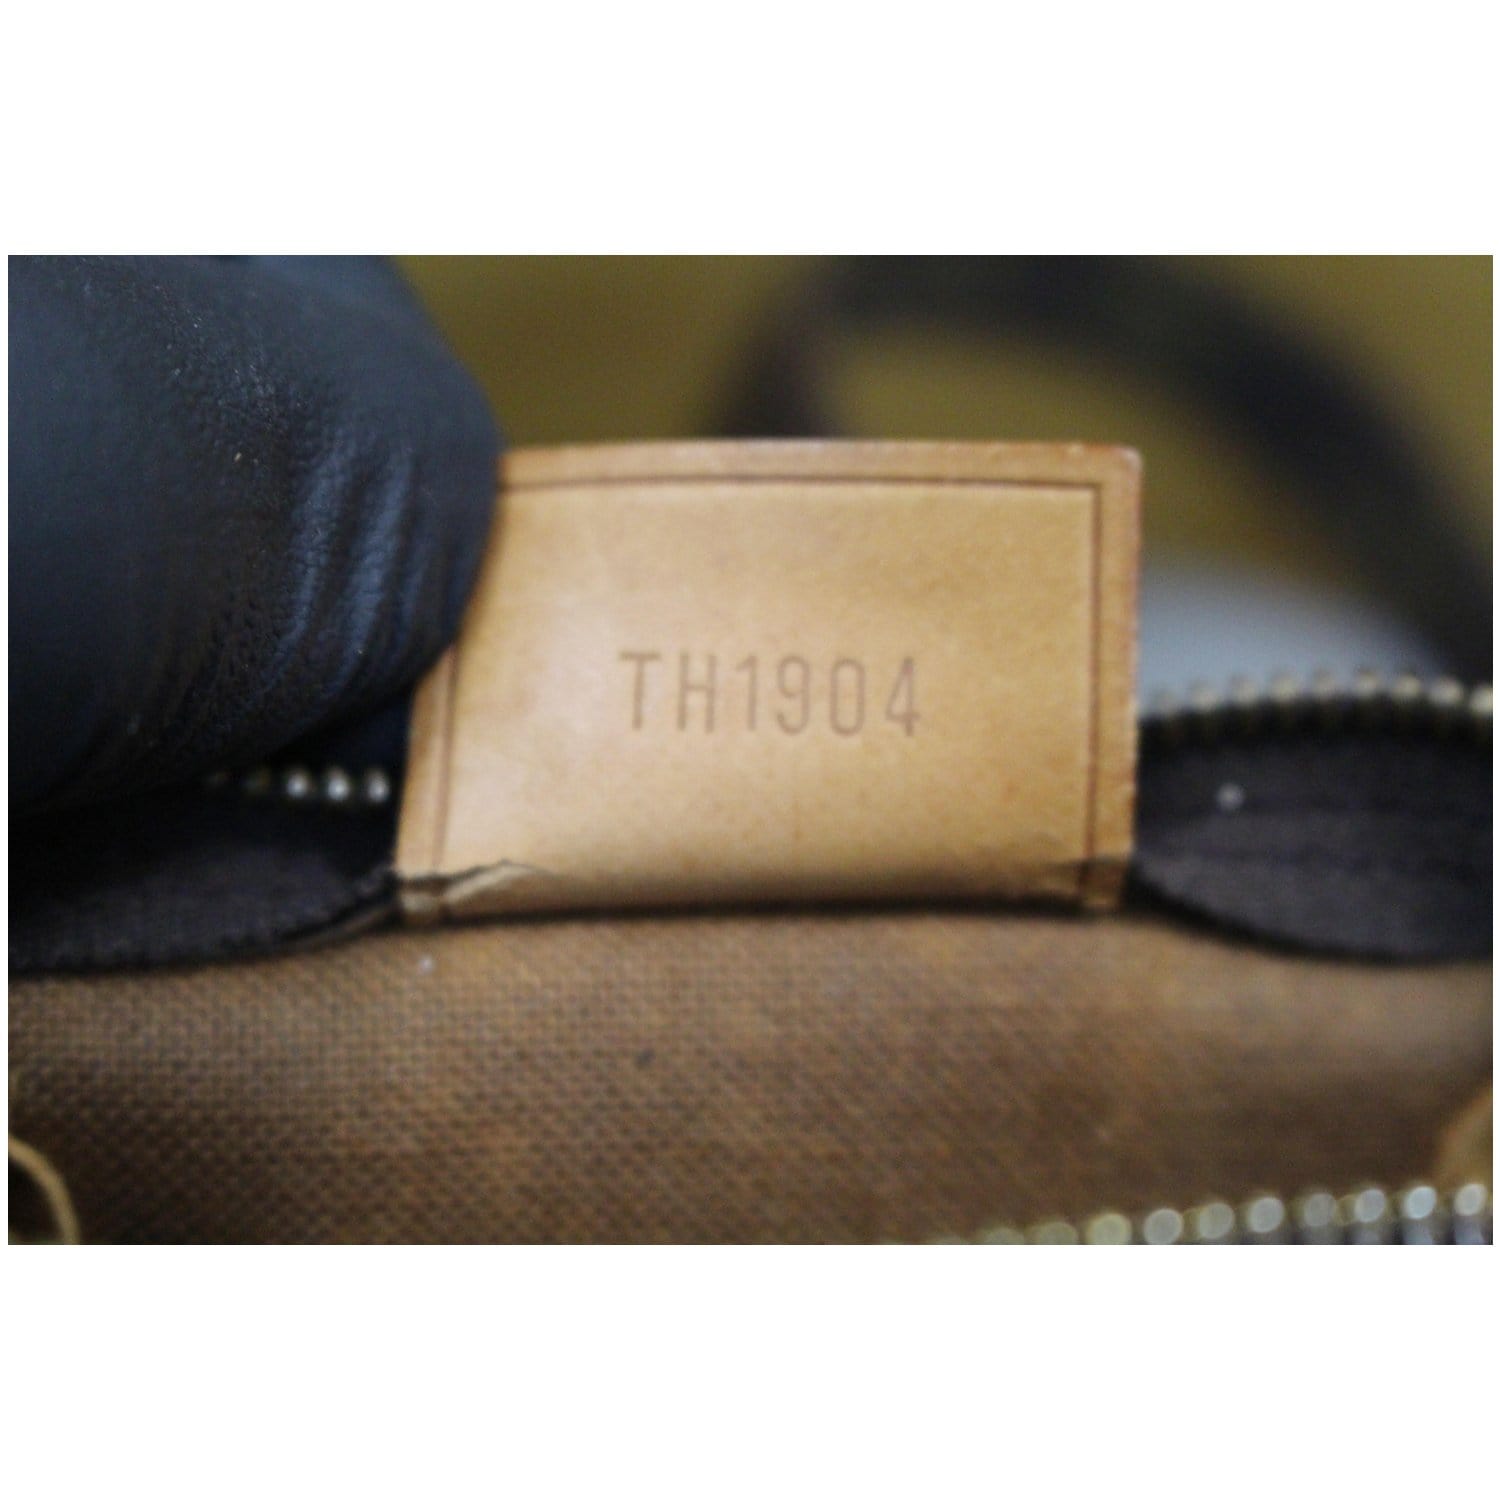 Louis Vuitton, Bags, Louis Vuitton Brown Monogram Speedy Sd57 Shoulder  Bag Purse Small Mini Vintage